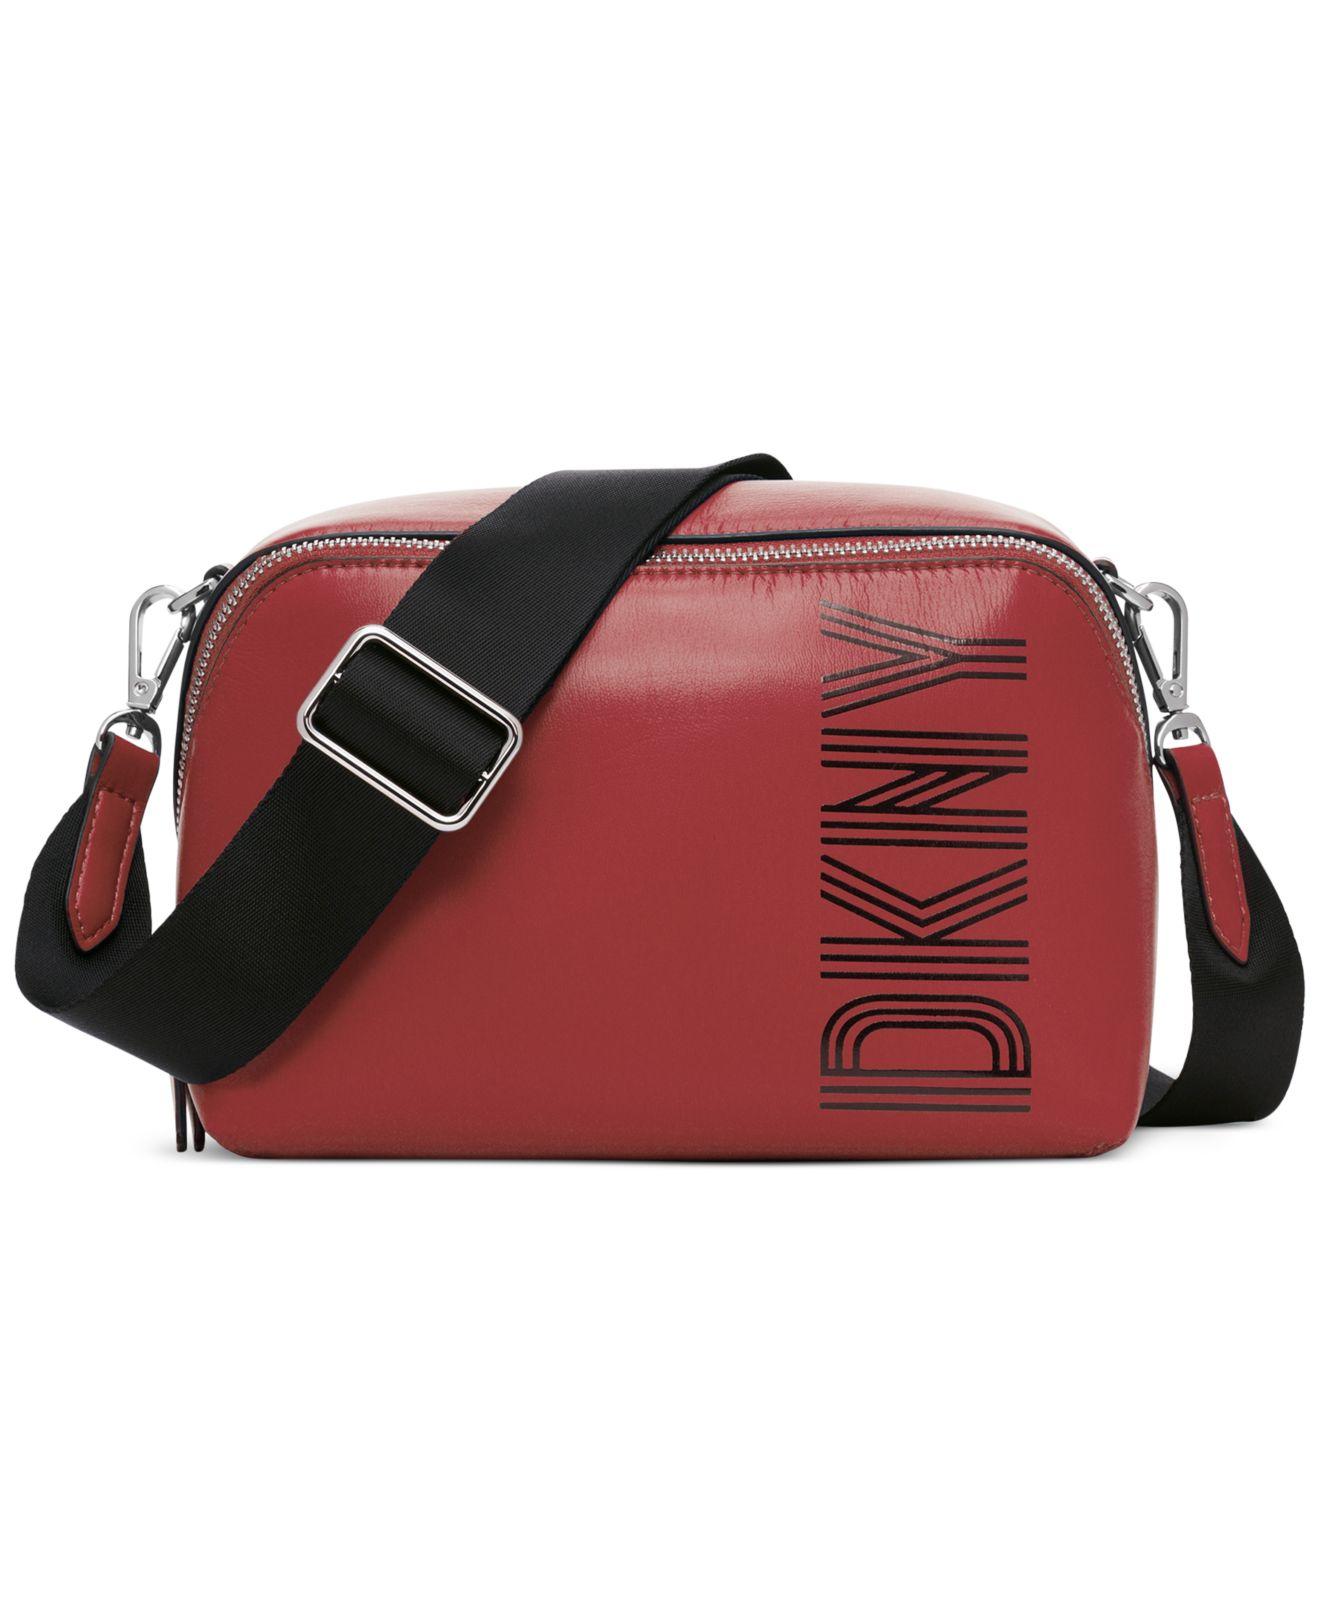 DKNY Tilly Small Zip-top Camera Bag Crossbody in Red